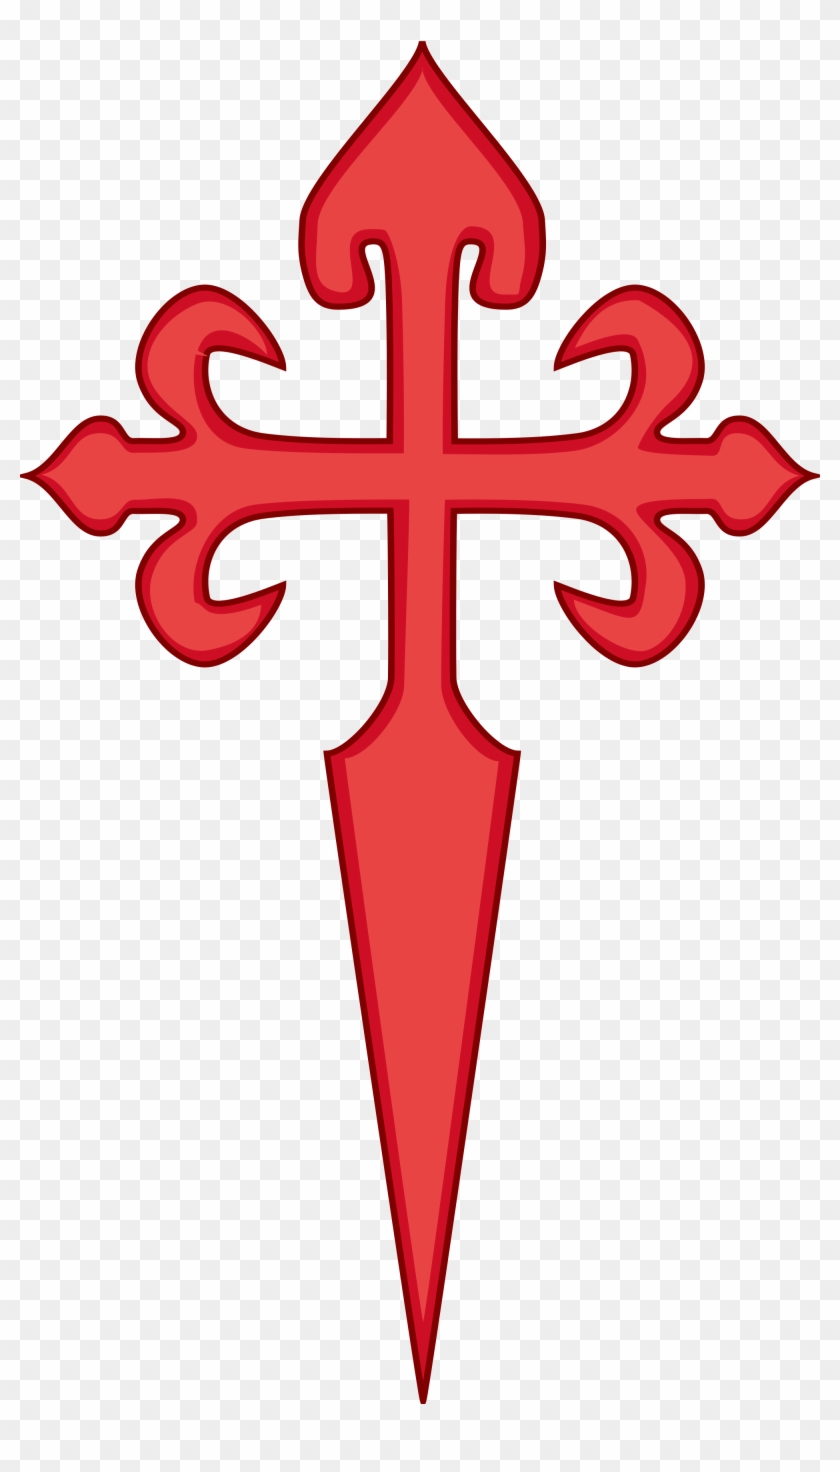 Cross Of Saint James - Santiago De Compostela Cross #248743